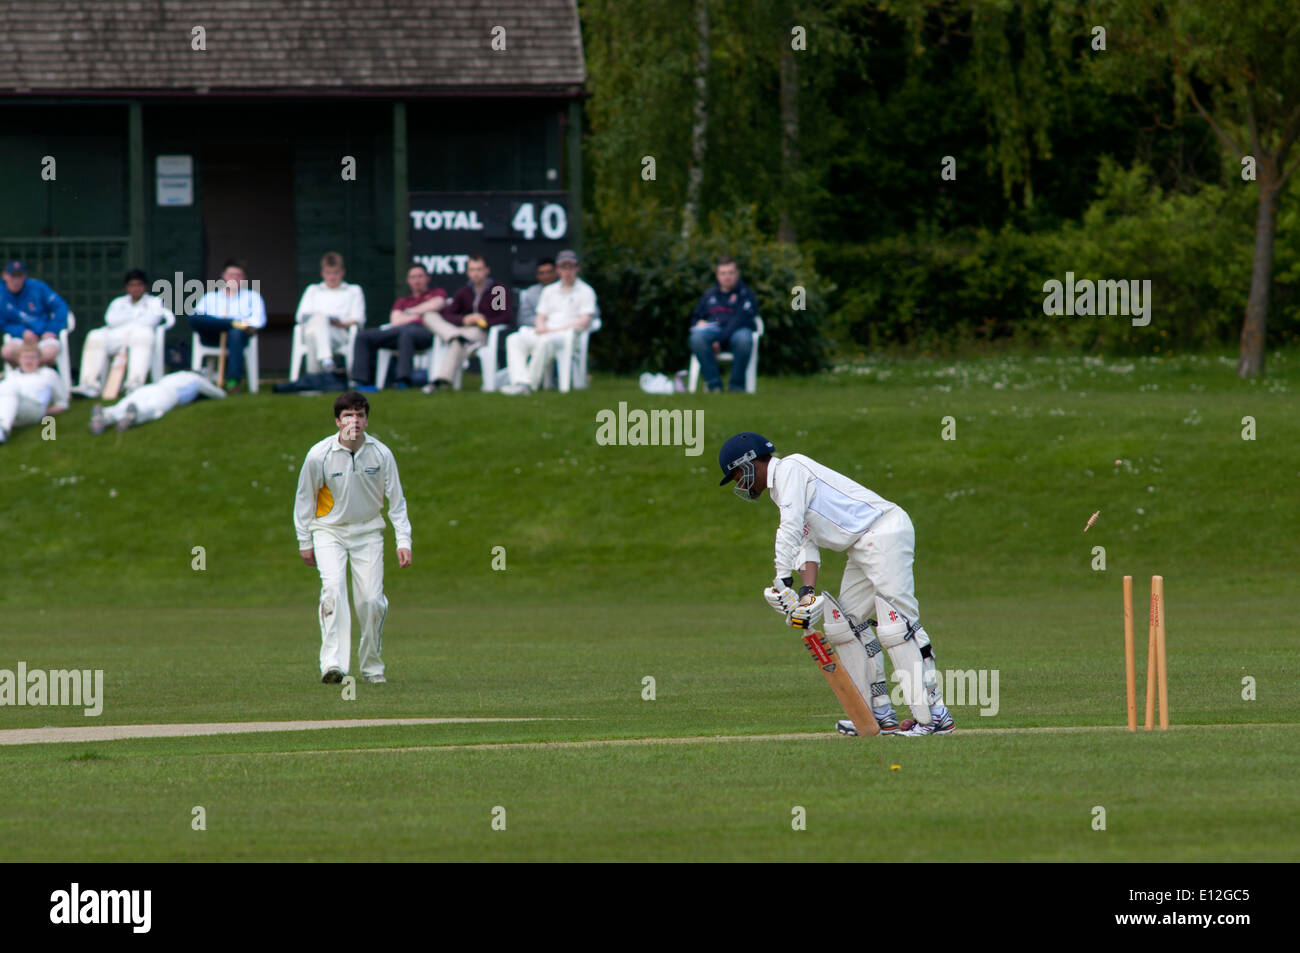 University sport, men`s cricket at Warwick University, England, UK. Batsman bowled out, bails flying. Stock Photo